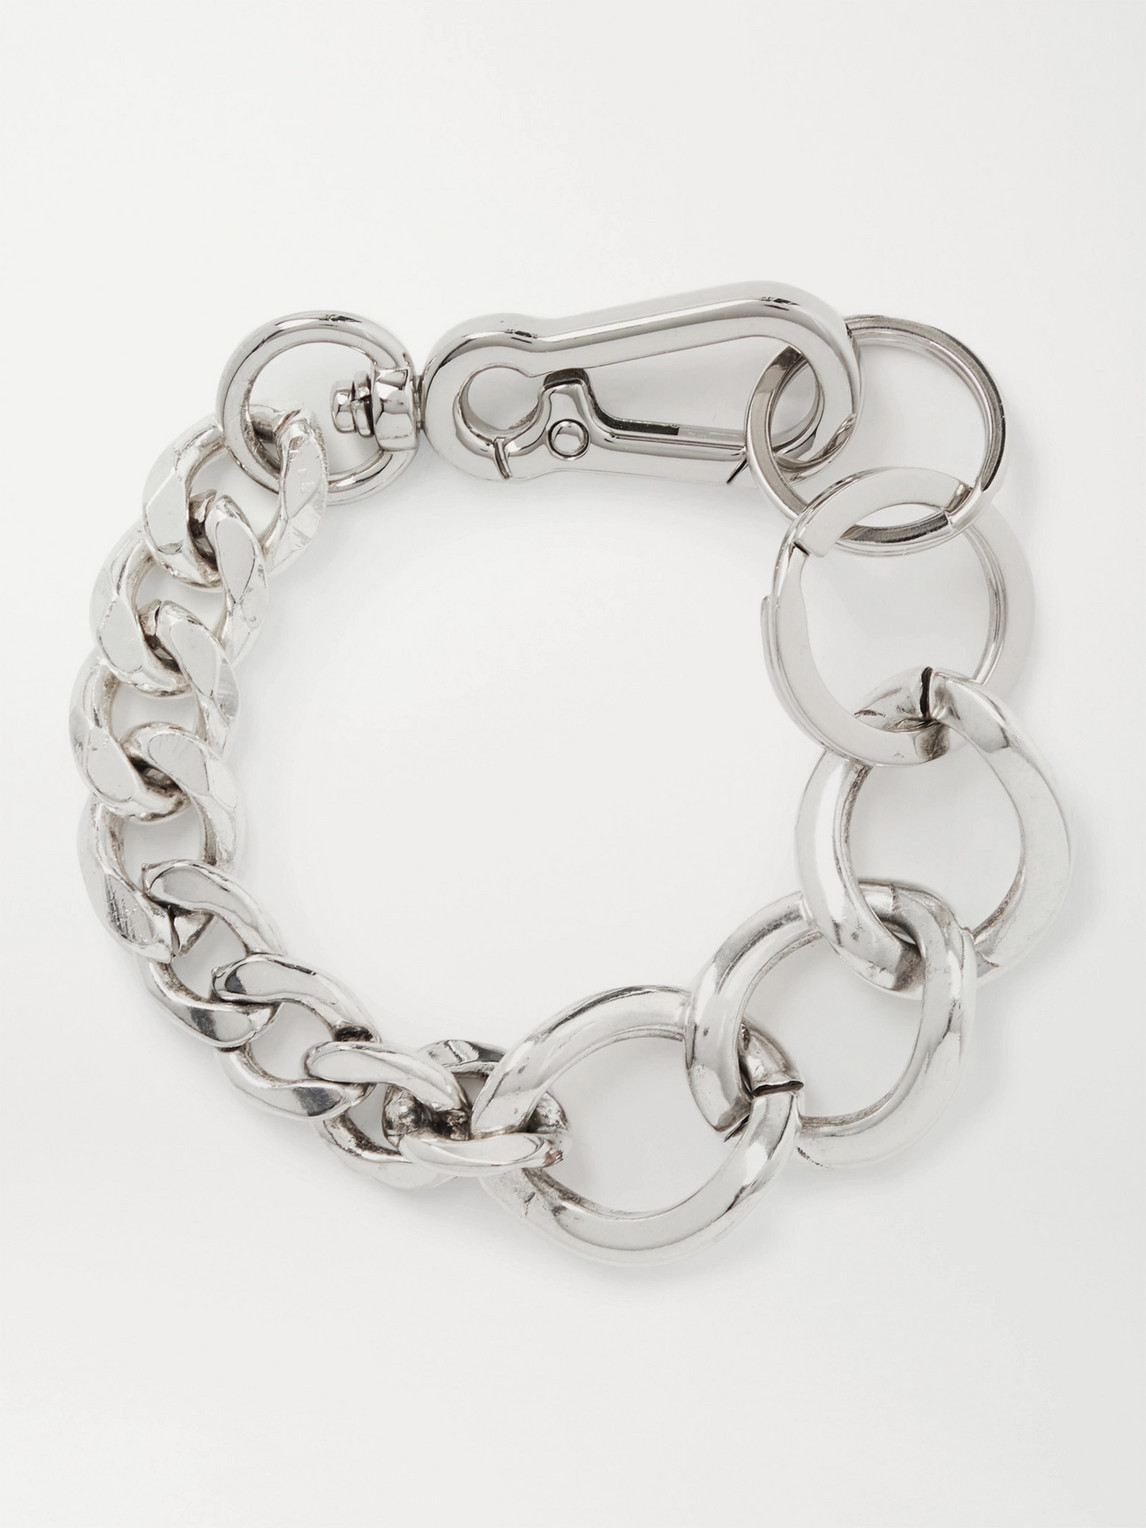 Martine Ali Tri-link Silver-plated Bracelet